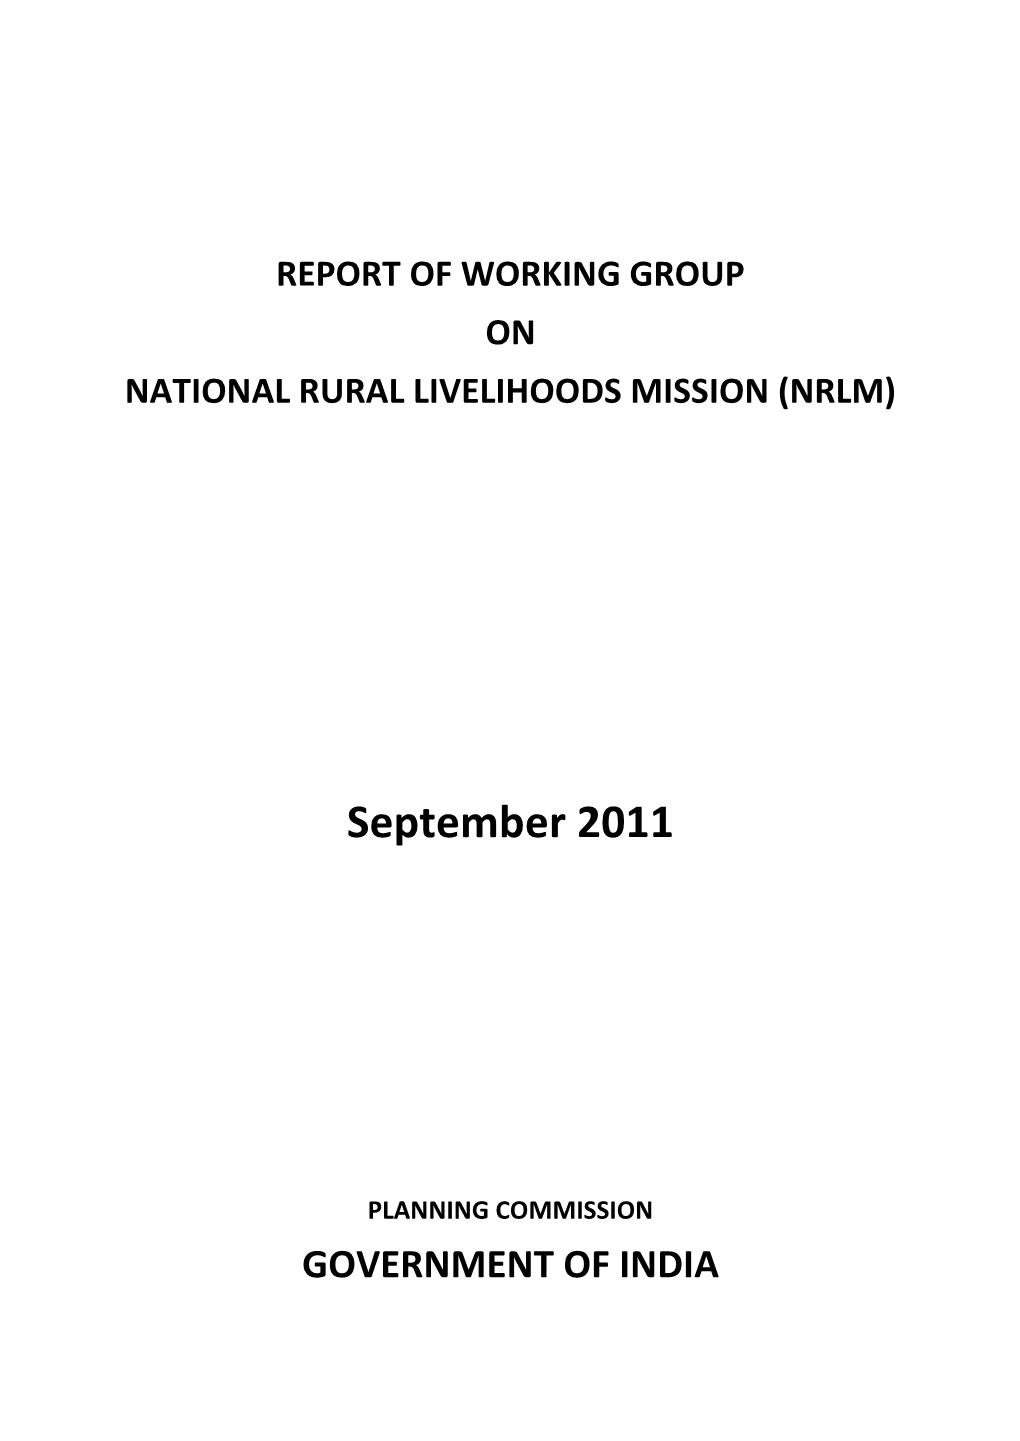 Report of Working Group on National Rural Livelihoods Mission (Nrlm)